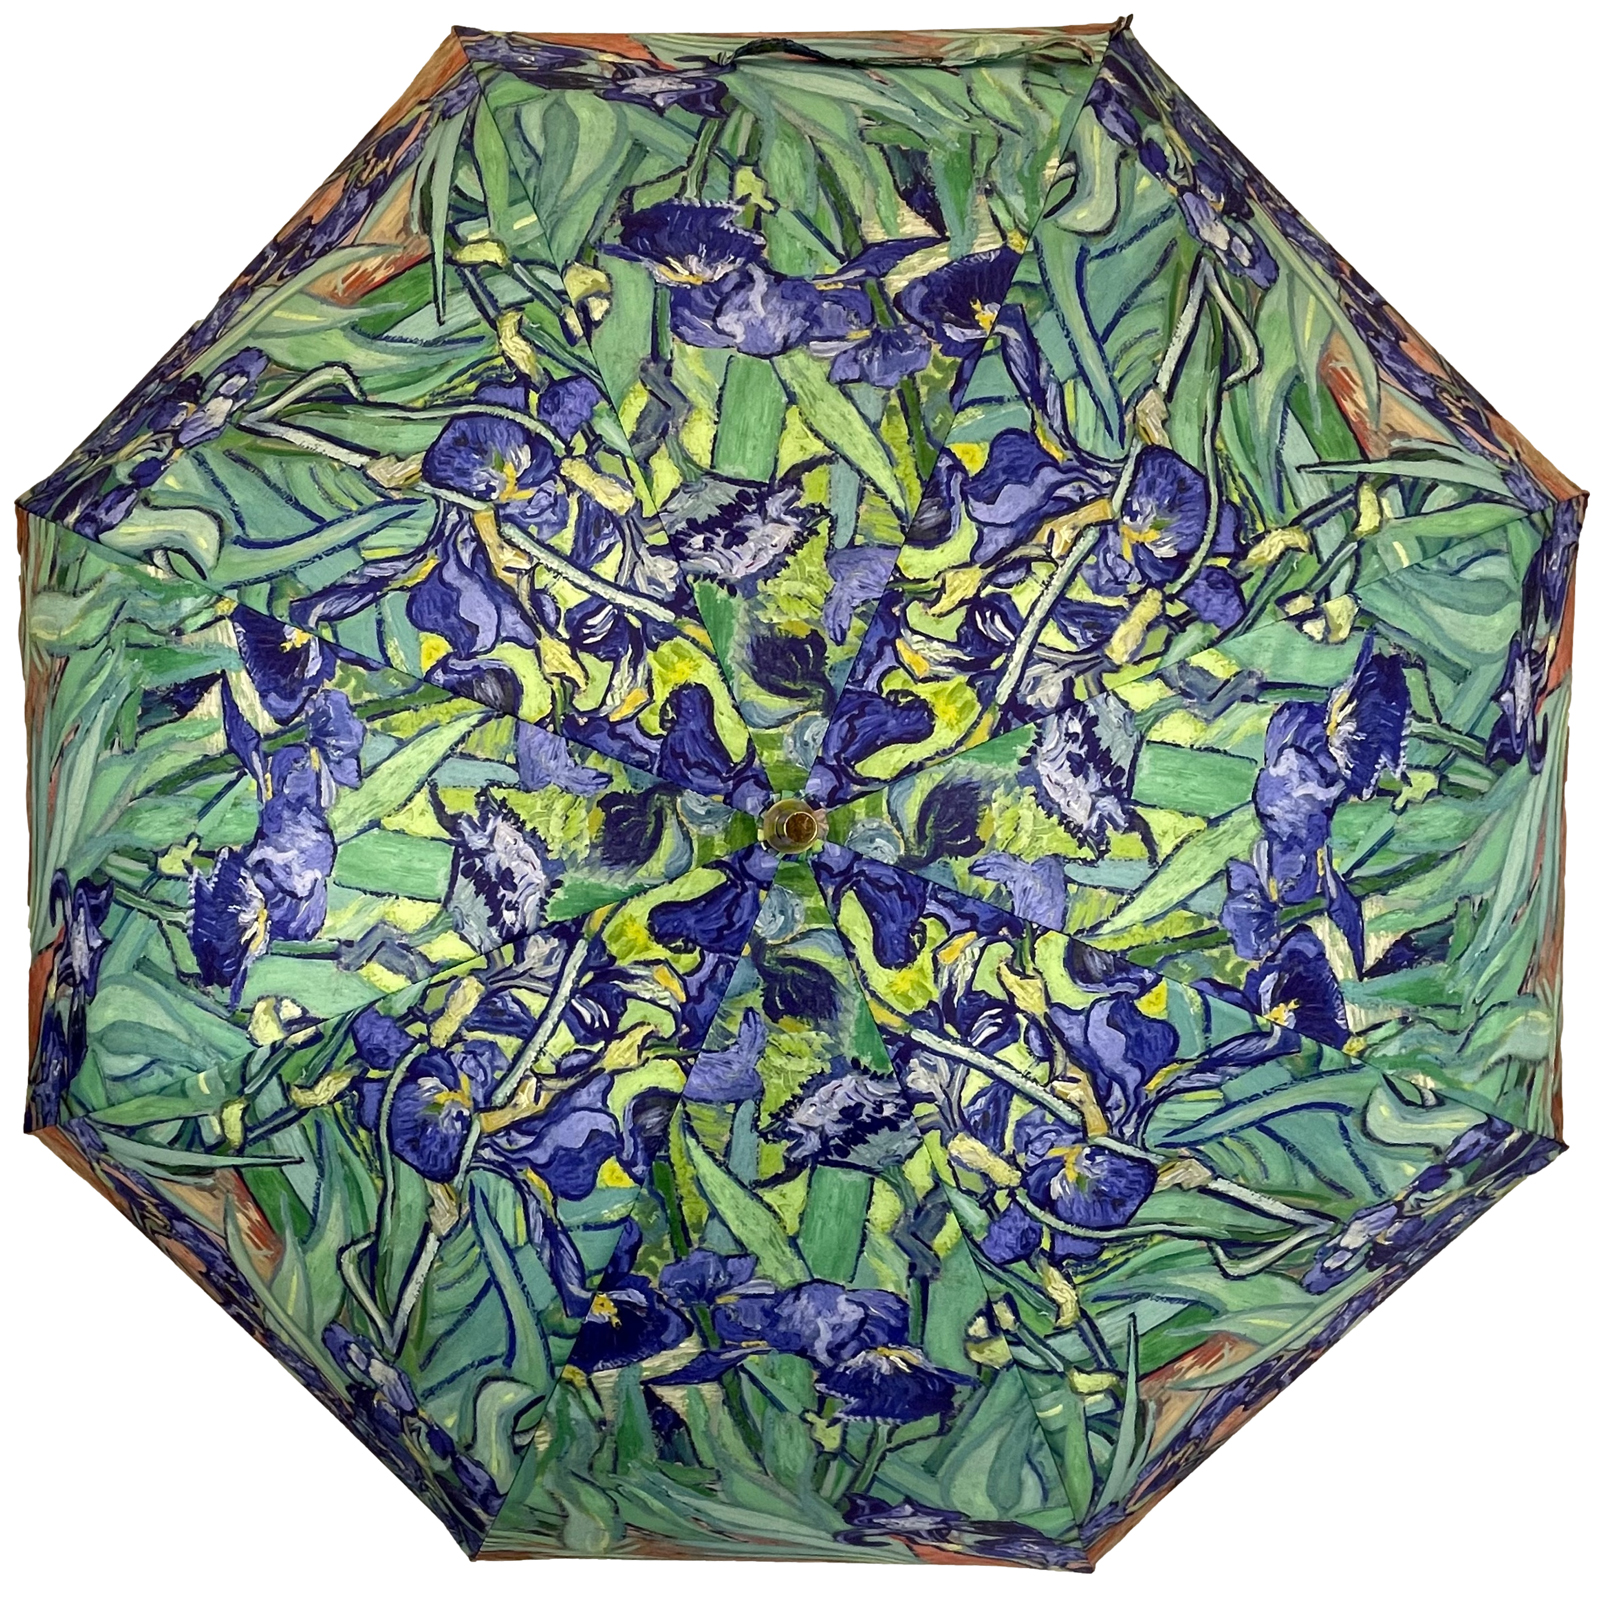 Stormking Classic Walking Length Umbrella - Art Collection - Irises by Van Gogh